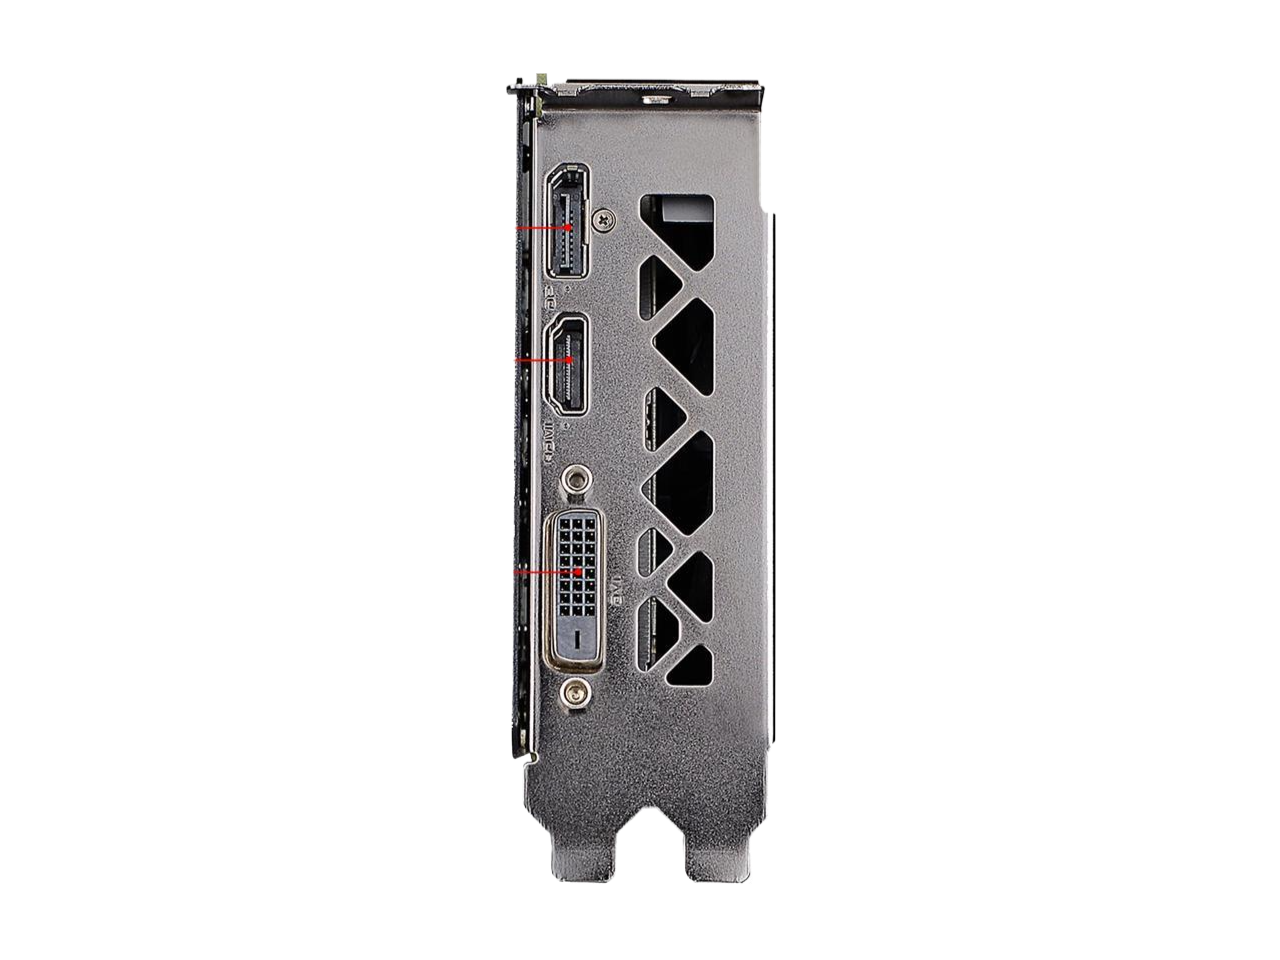 EVGA GeForce RTX 2060 KO ULTRA GAMING 6GB GDDR6 Dual Fans Metal Backplate Video Graphics Card 06G-P4-2068-KR